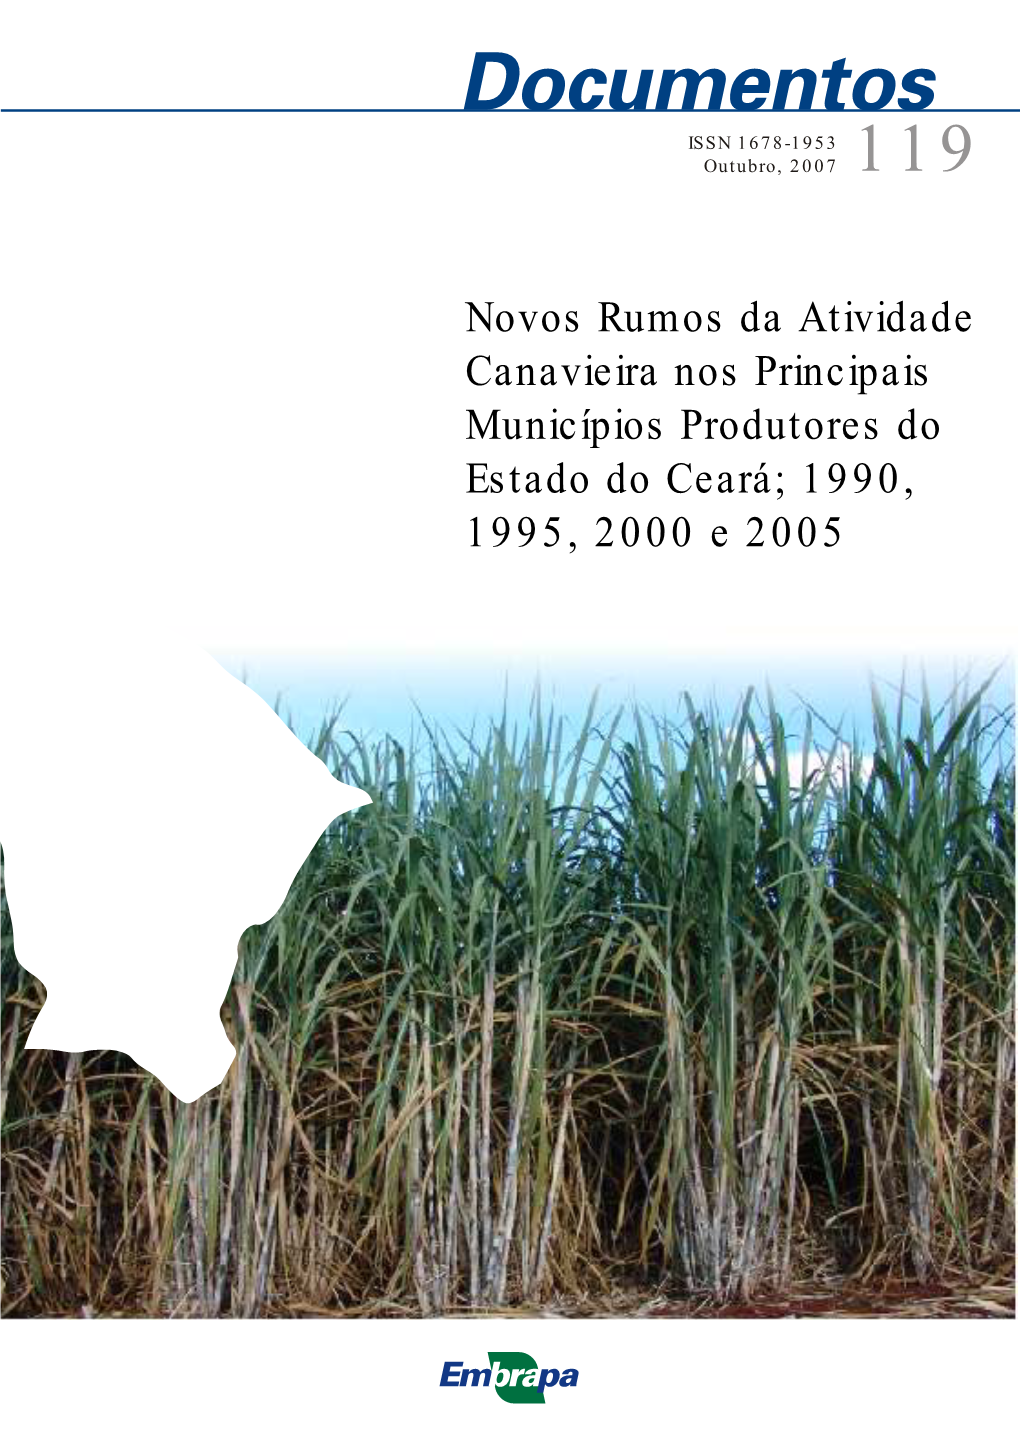 Novos Rumos Da Atividade Canavieira Nos Principais Municípios Produtores Do Estado Do Ceará; 1990, 1995, 2000 E 2005 ISSN 1678-1953 Outubro, 2007